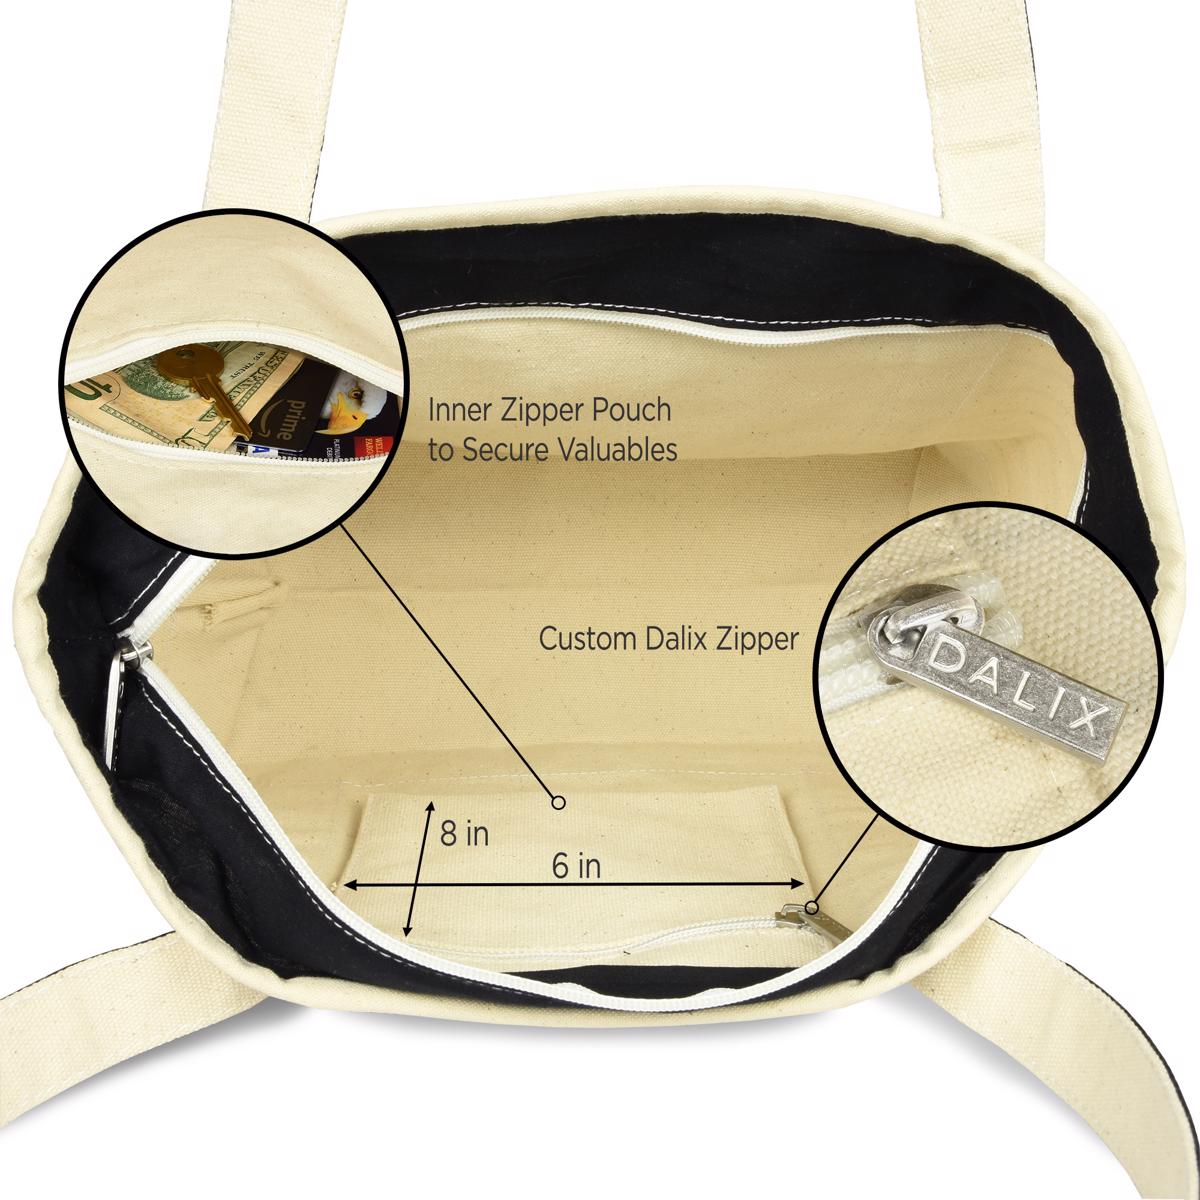 Dalix Medium Personalized Tote Bag Monogrammed Initial Letter - P Black